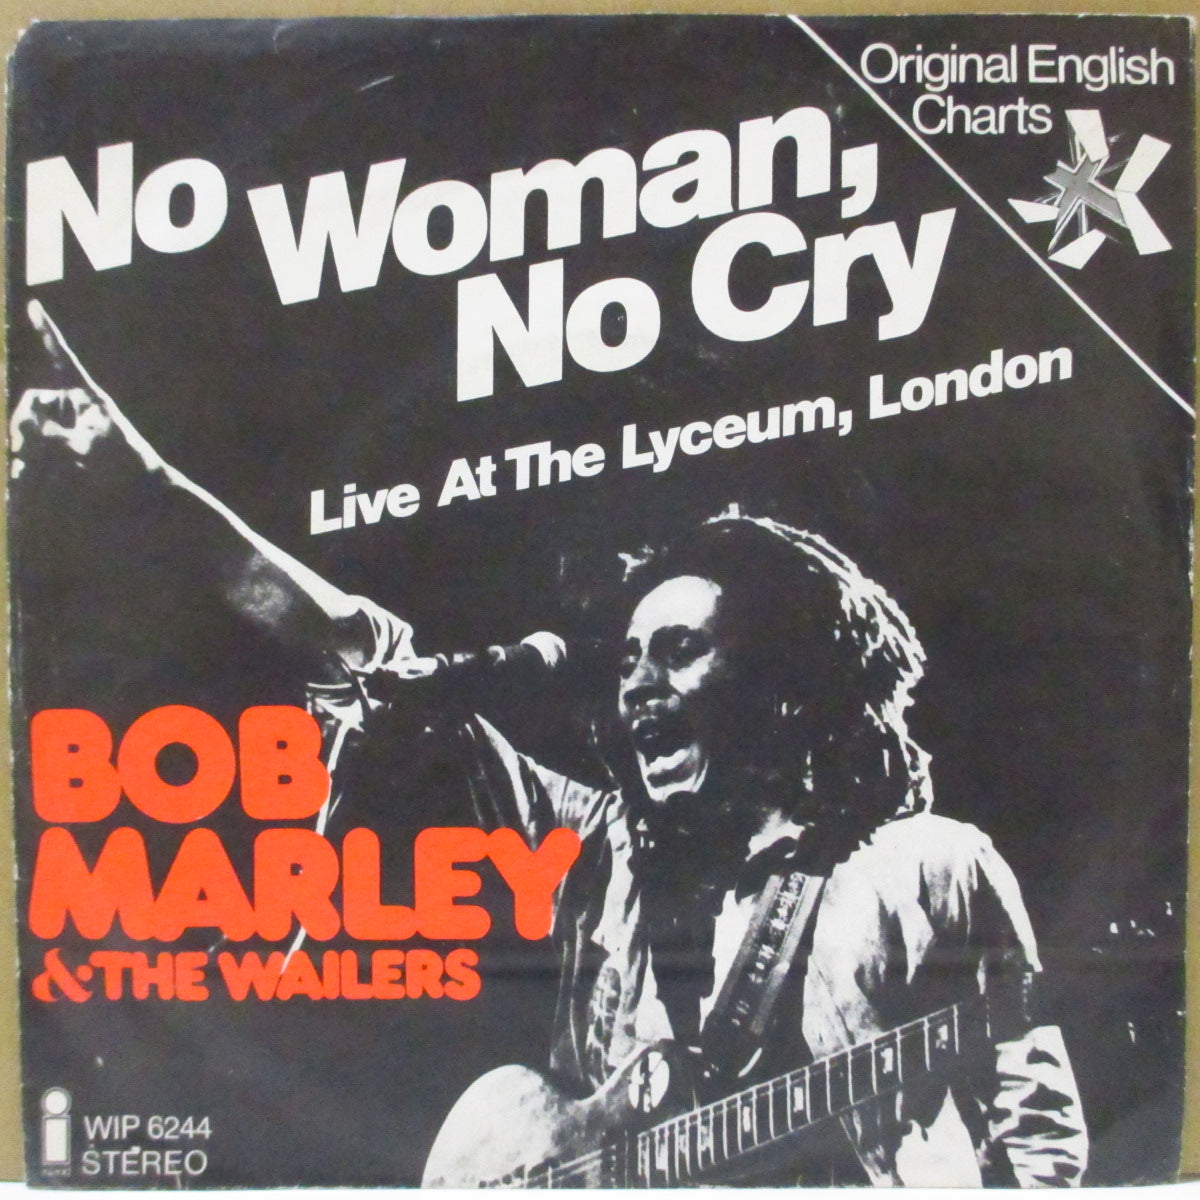 BOB MARLEY u0026 THE WAILERS (ボブ・マーリーu0026ザ・ウェイラーズ) - No Woman